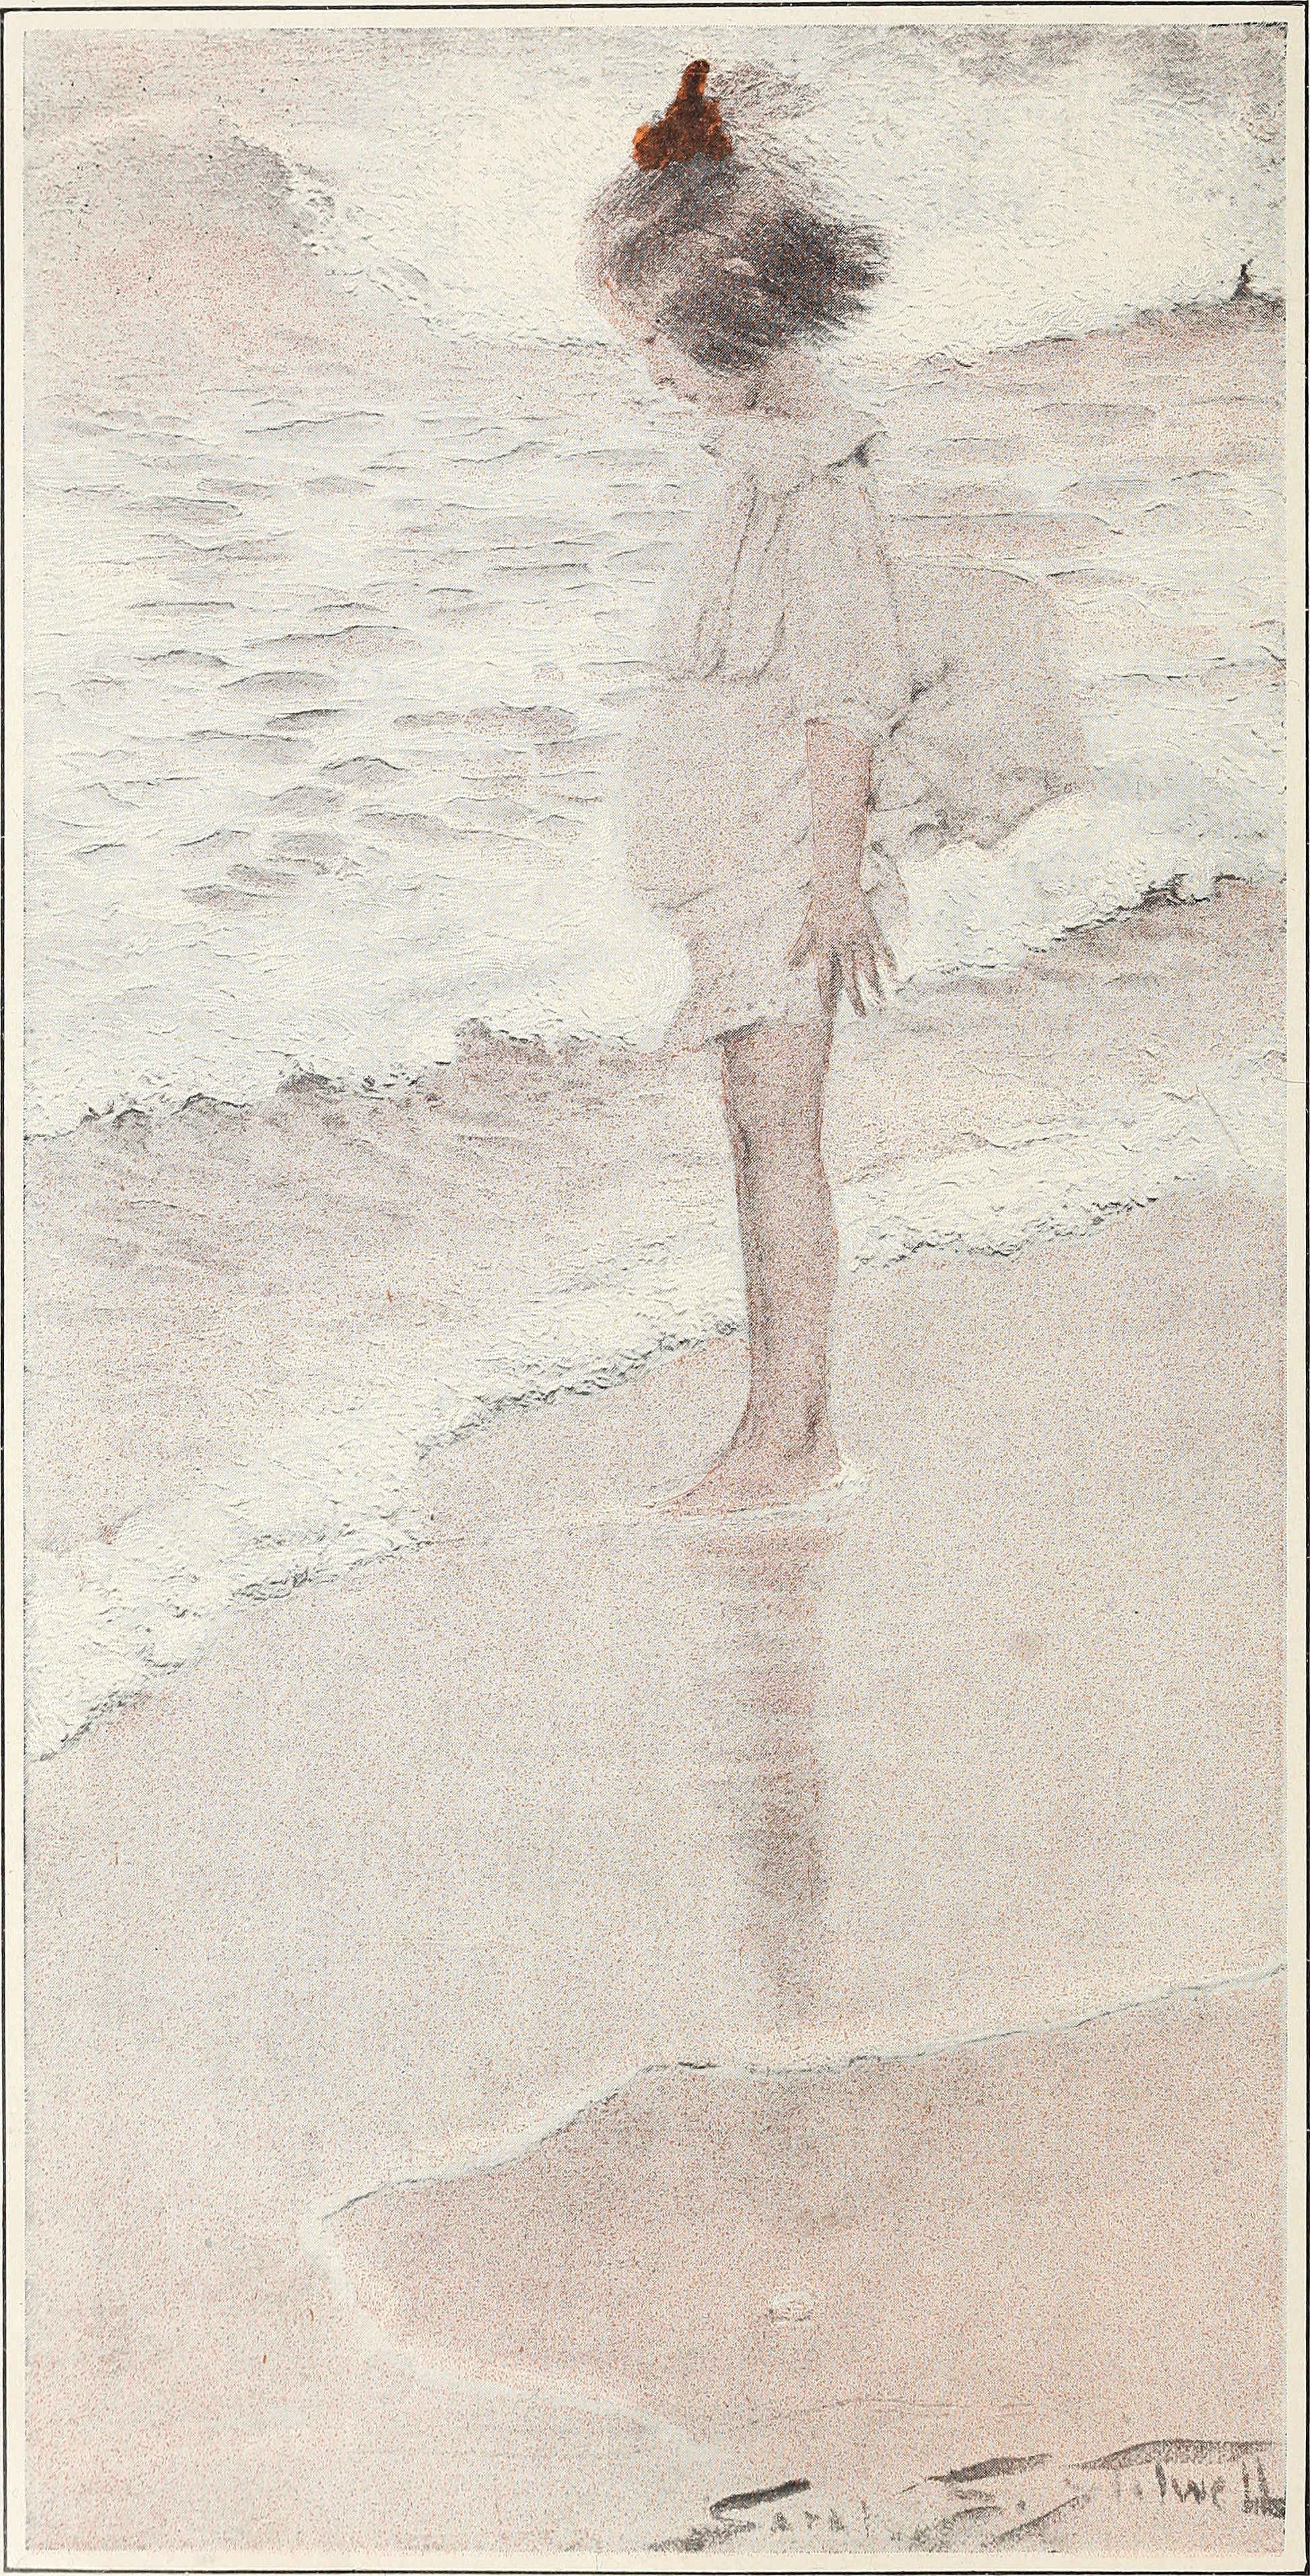 "In paddling" (1901) | Small bathroom wall art print | Sarah S. Stilwell Posters, Prints, & Visual Artwork The Trumpet Shop   